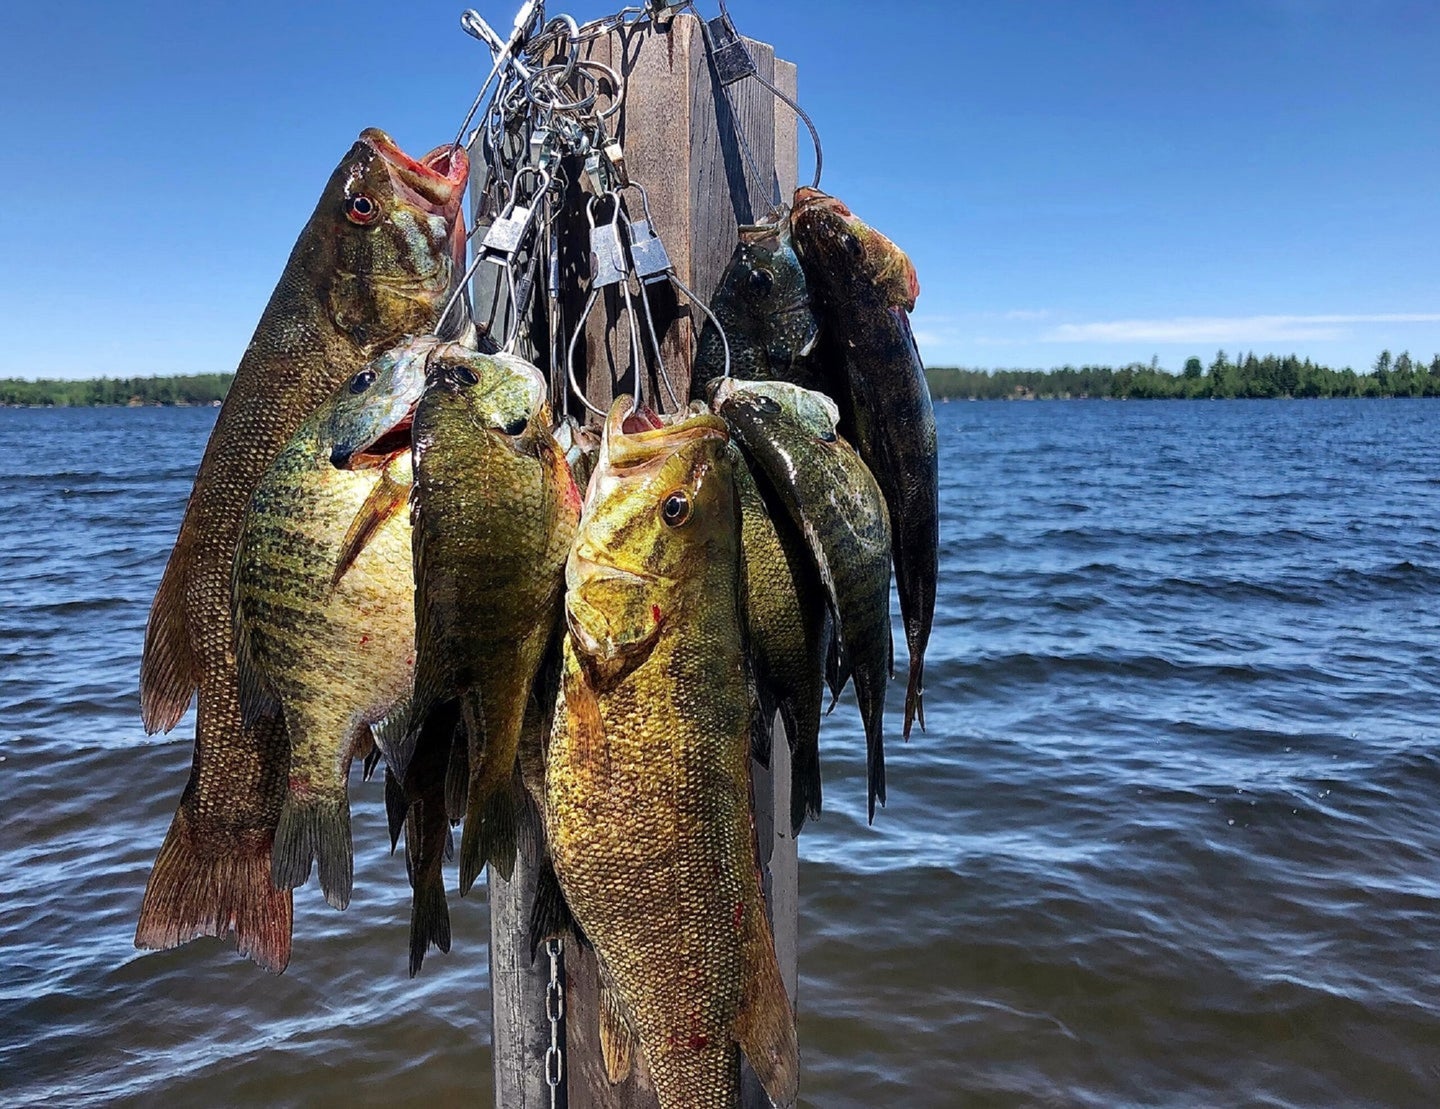 Gamefish hung up on a line on a lake dock